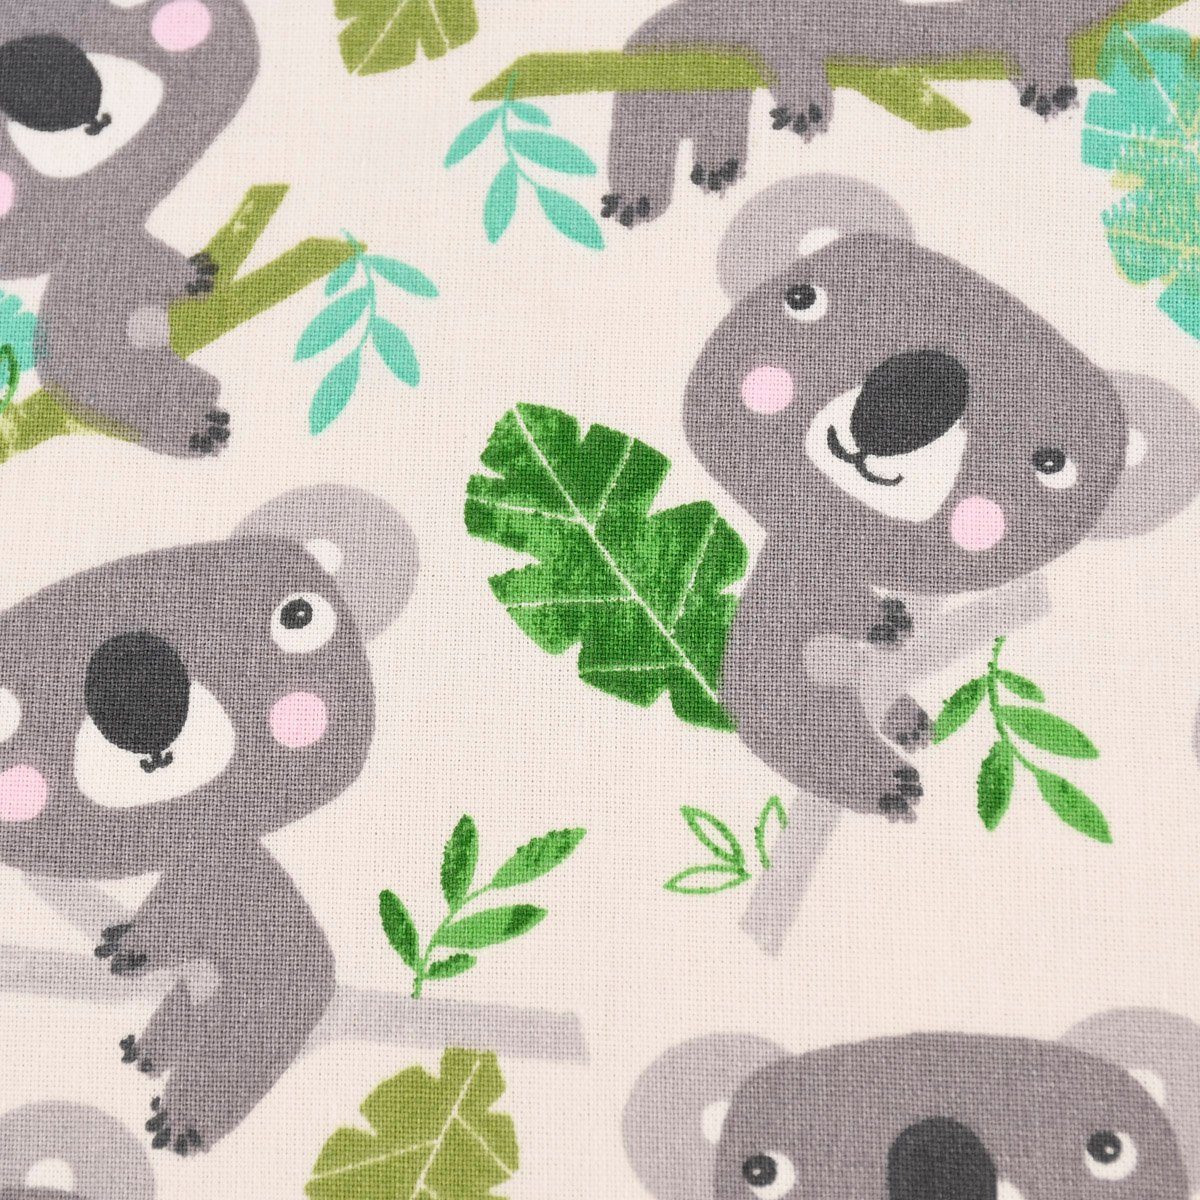 grau SCHÖNER weiß Koala Dekokissen LEBEN. grün LEBEN. 50x50cm Eukalyptus Kissenhülle SCHÖNER